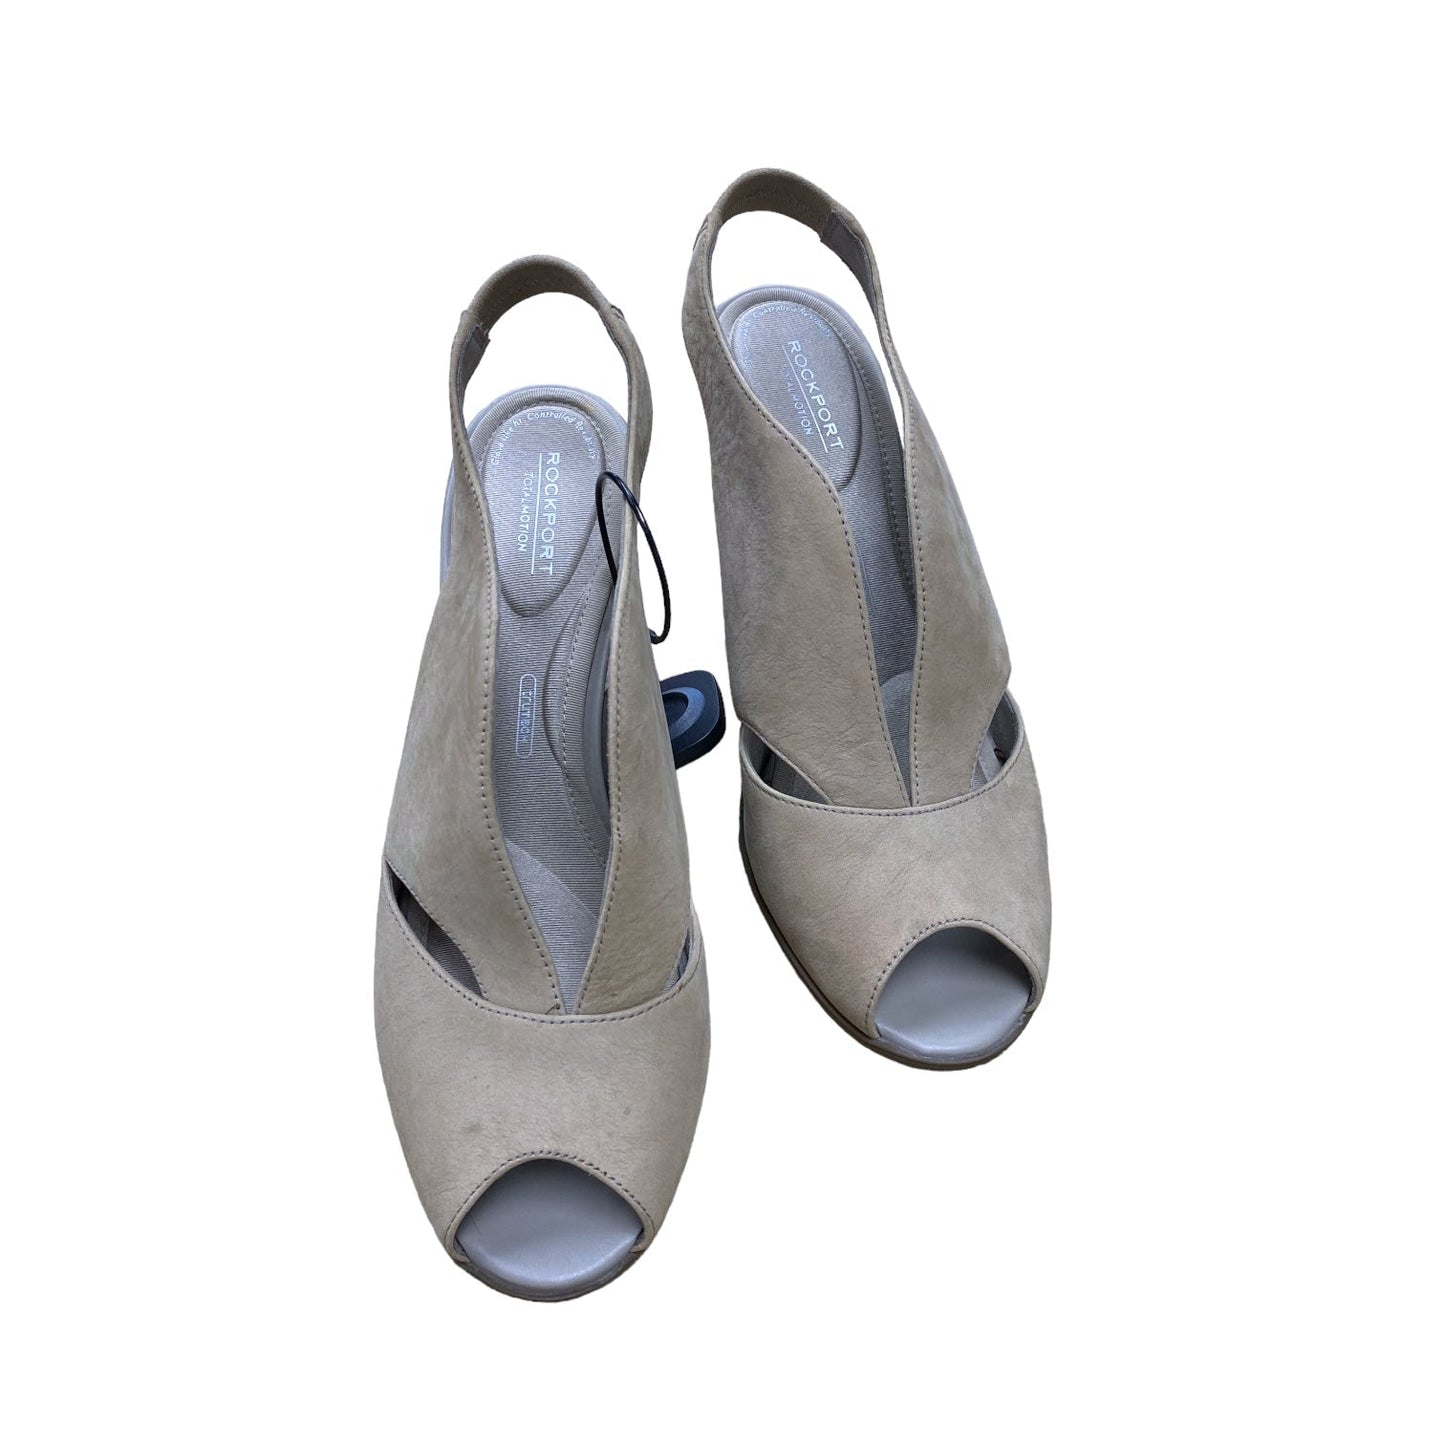 Sandals Heels Block By Rockport  Size: 7.5